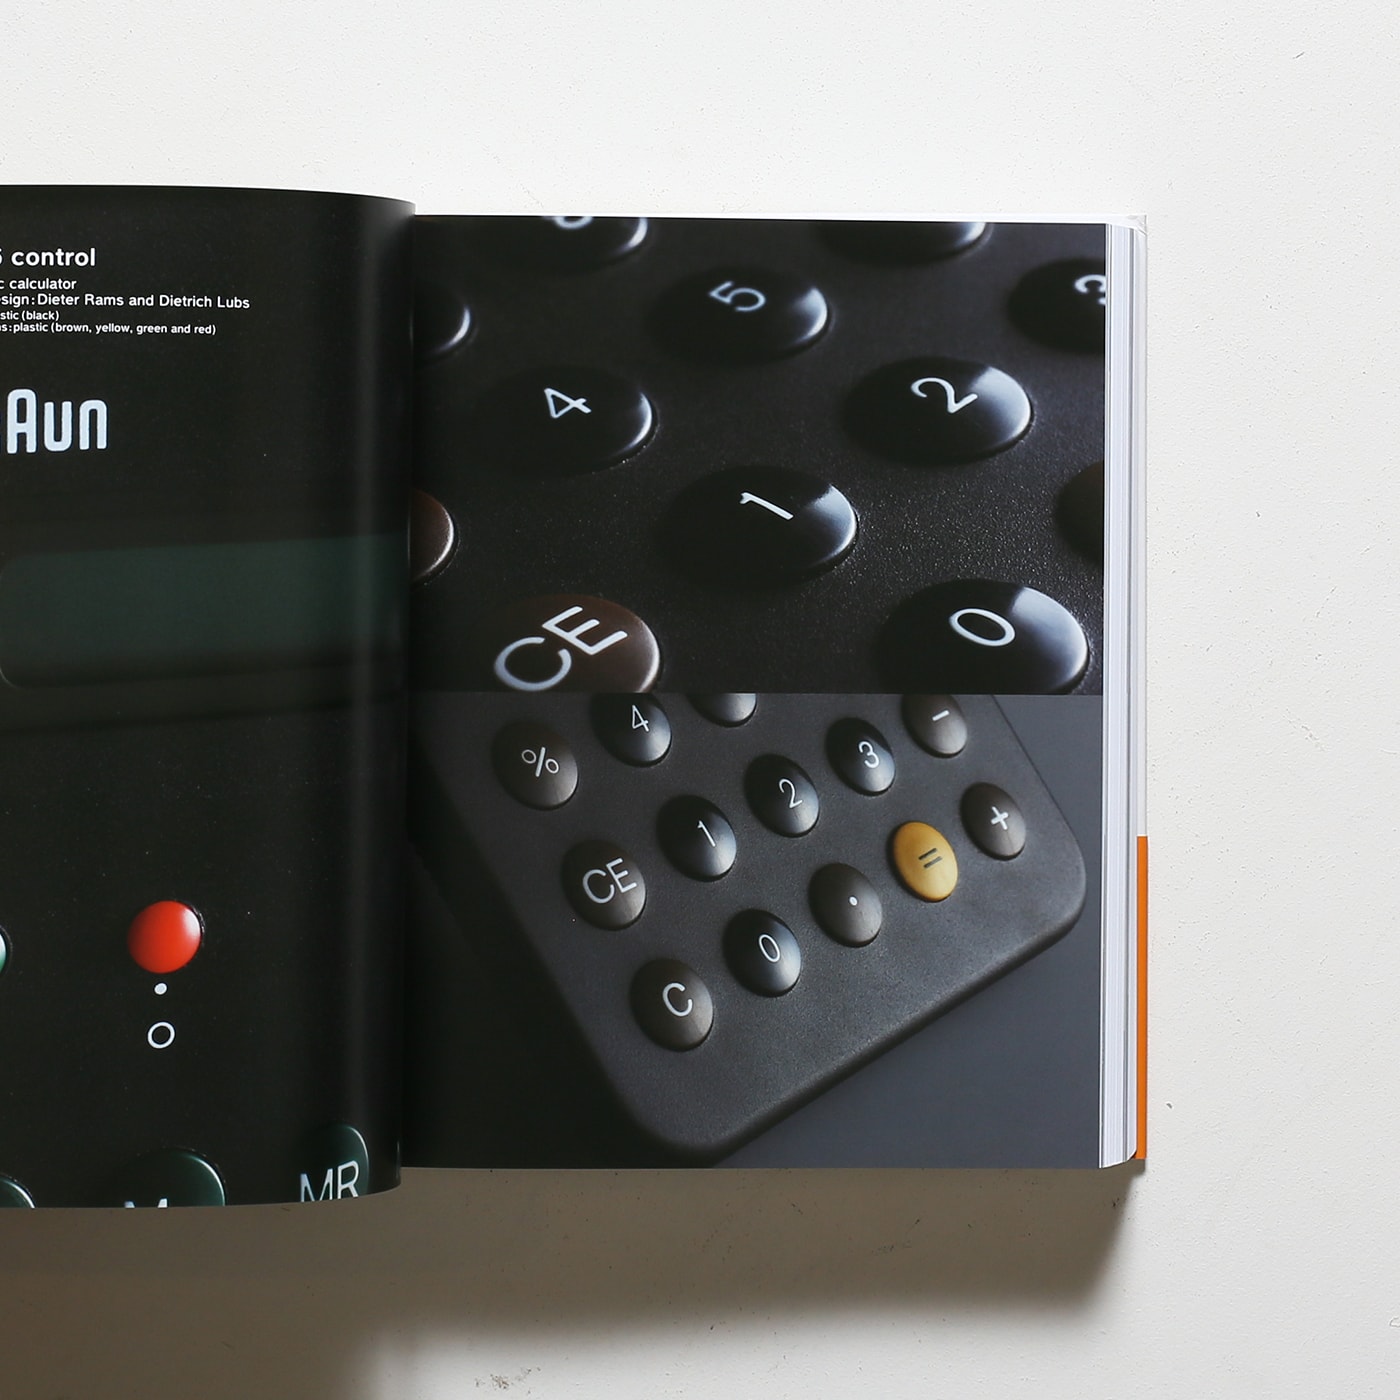 Less and More: The Design Ethos of Dieter Rams ハードカバー版